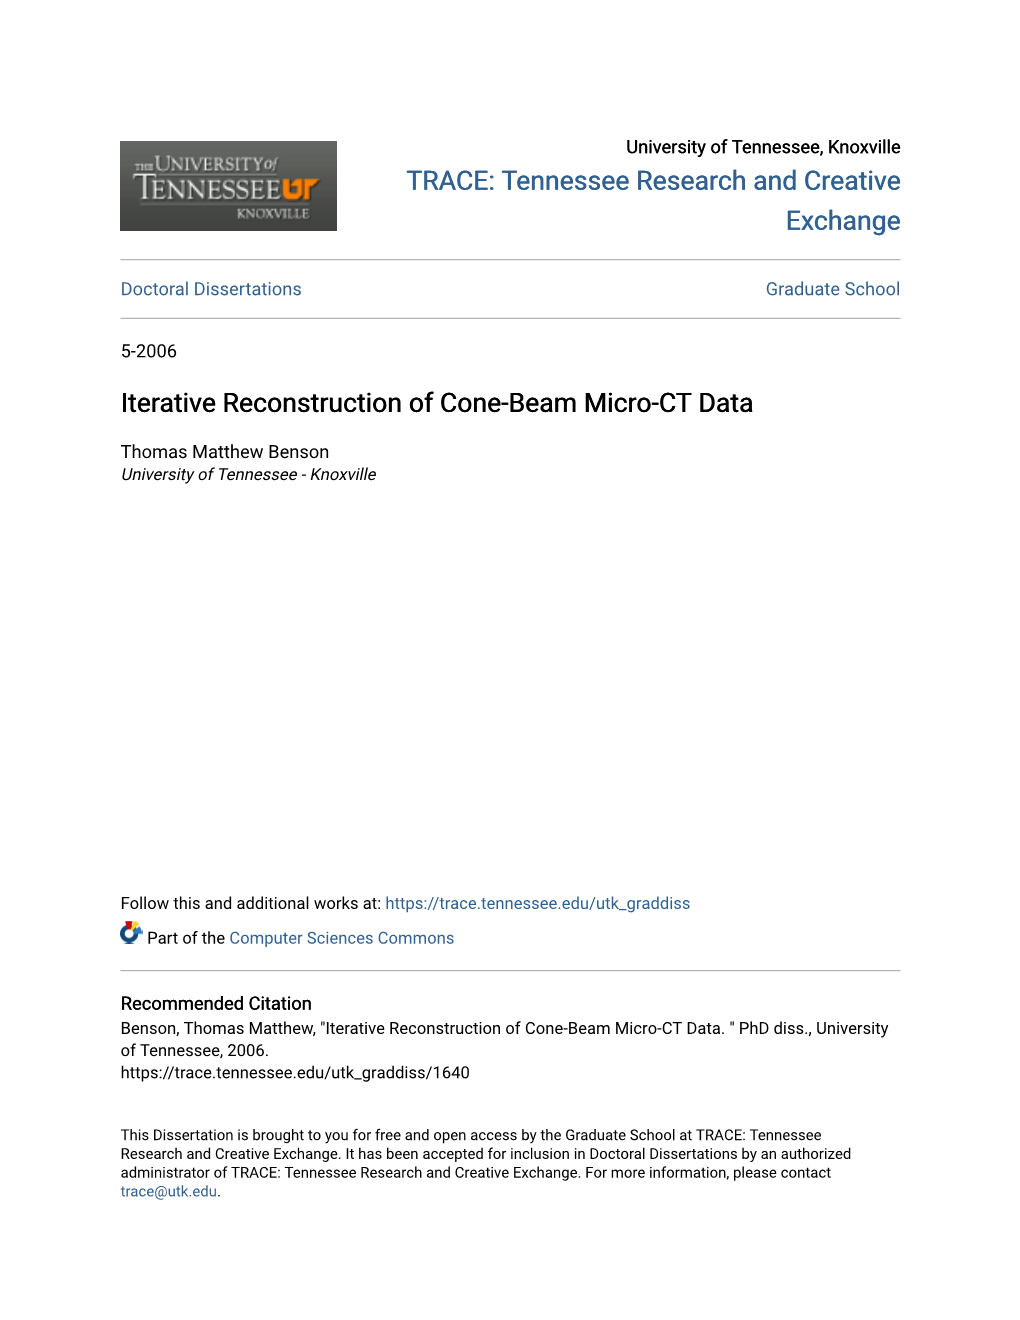 Iterative Reconstruction of Cone-Beam Micro-CT Data